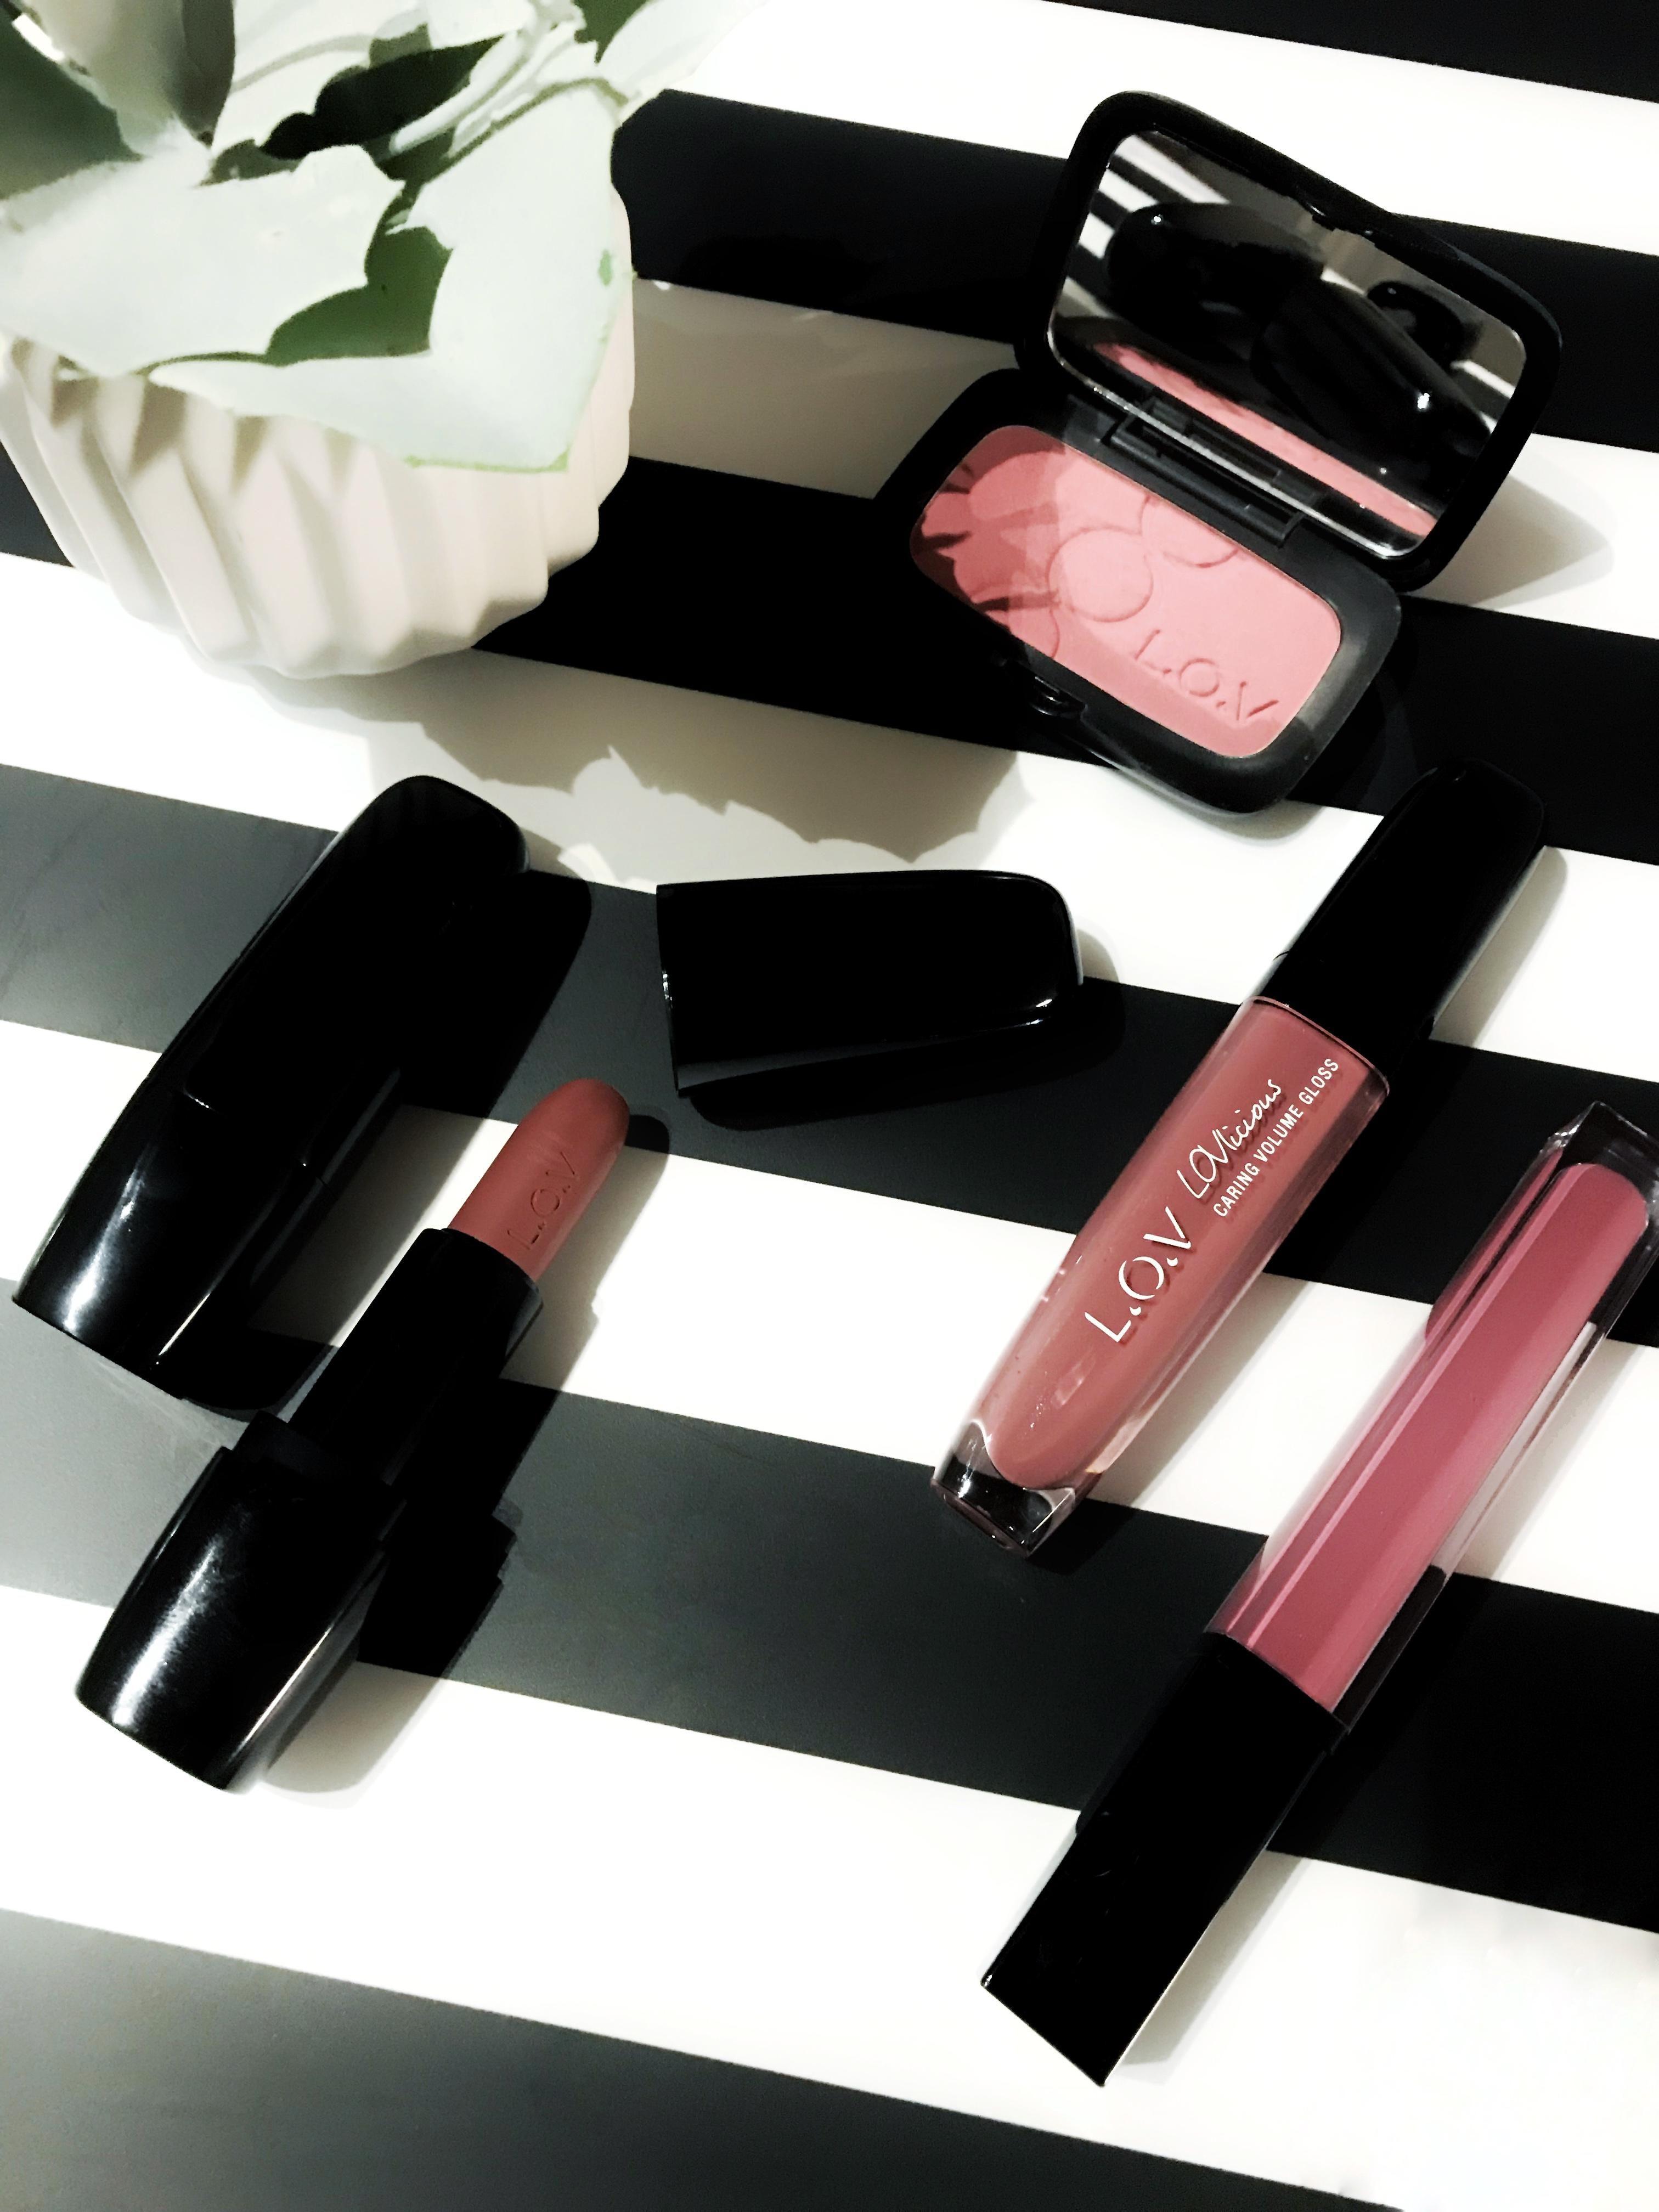 Meine momentanen #beautyfavoriten in nude-pink. #lippenstift #nudes #pink #rouge #beauty #lipgloss #makeup